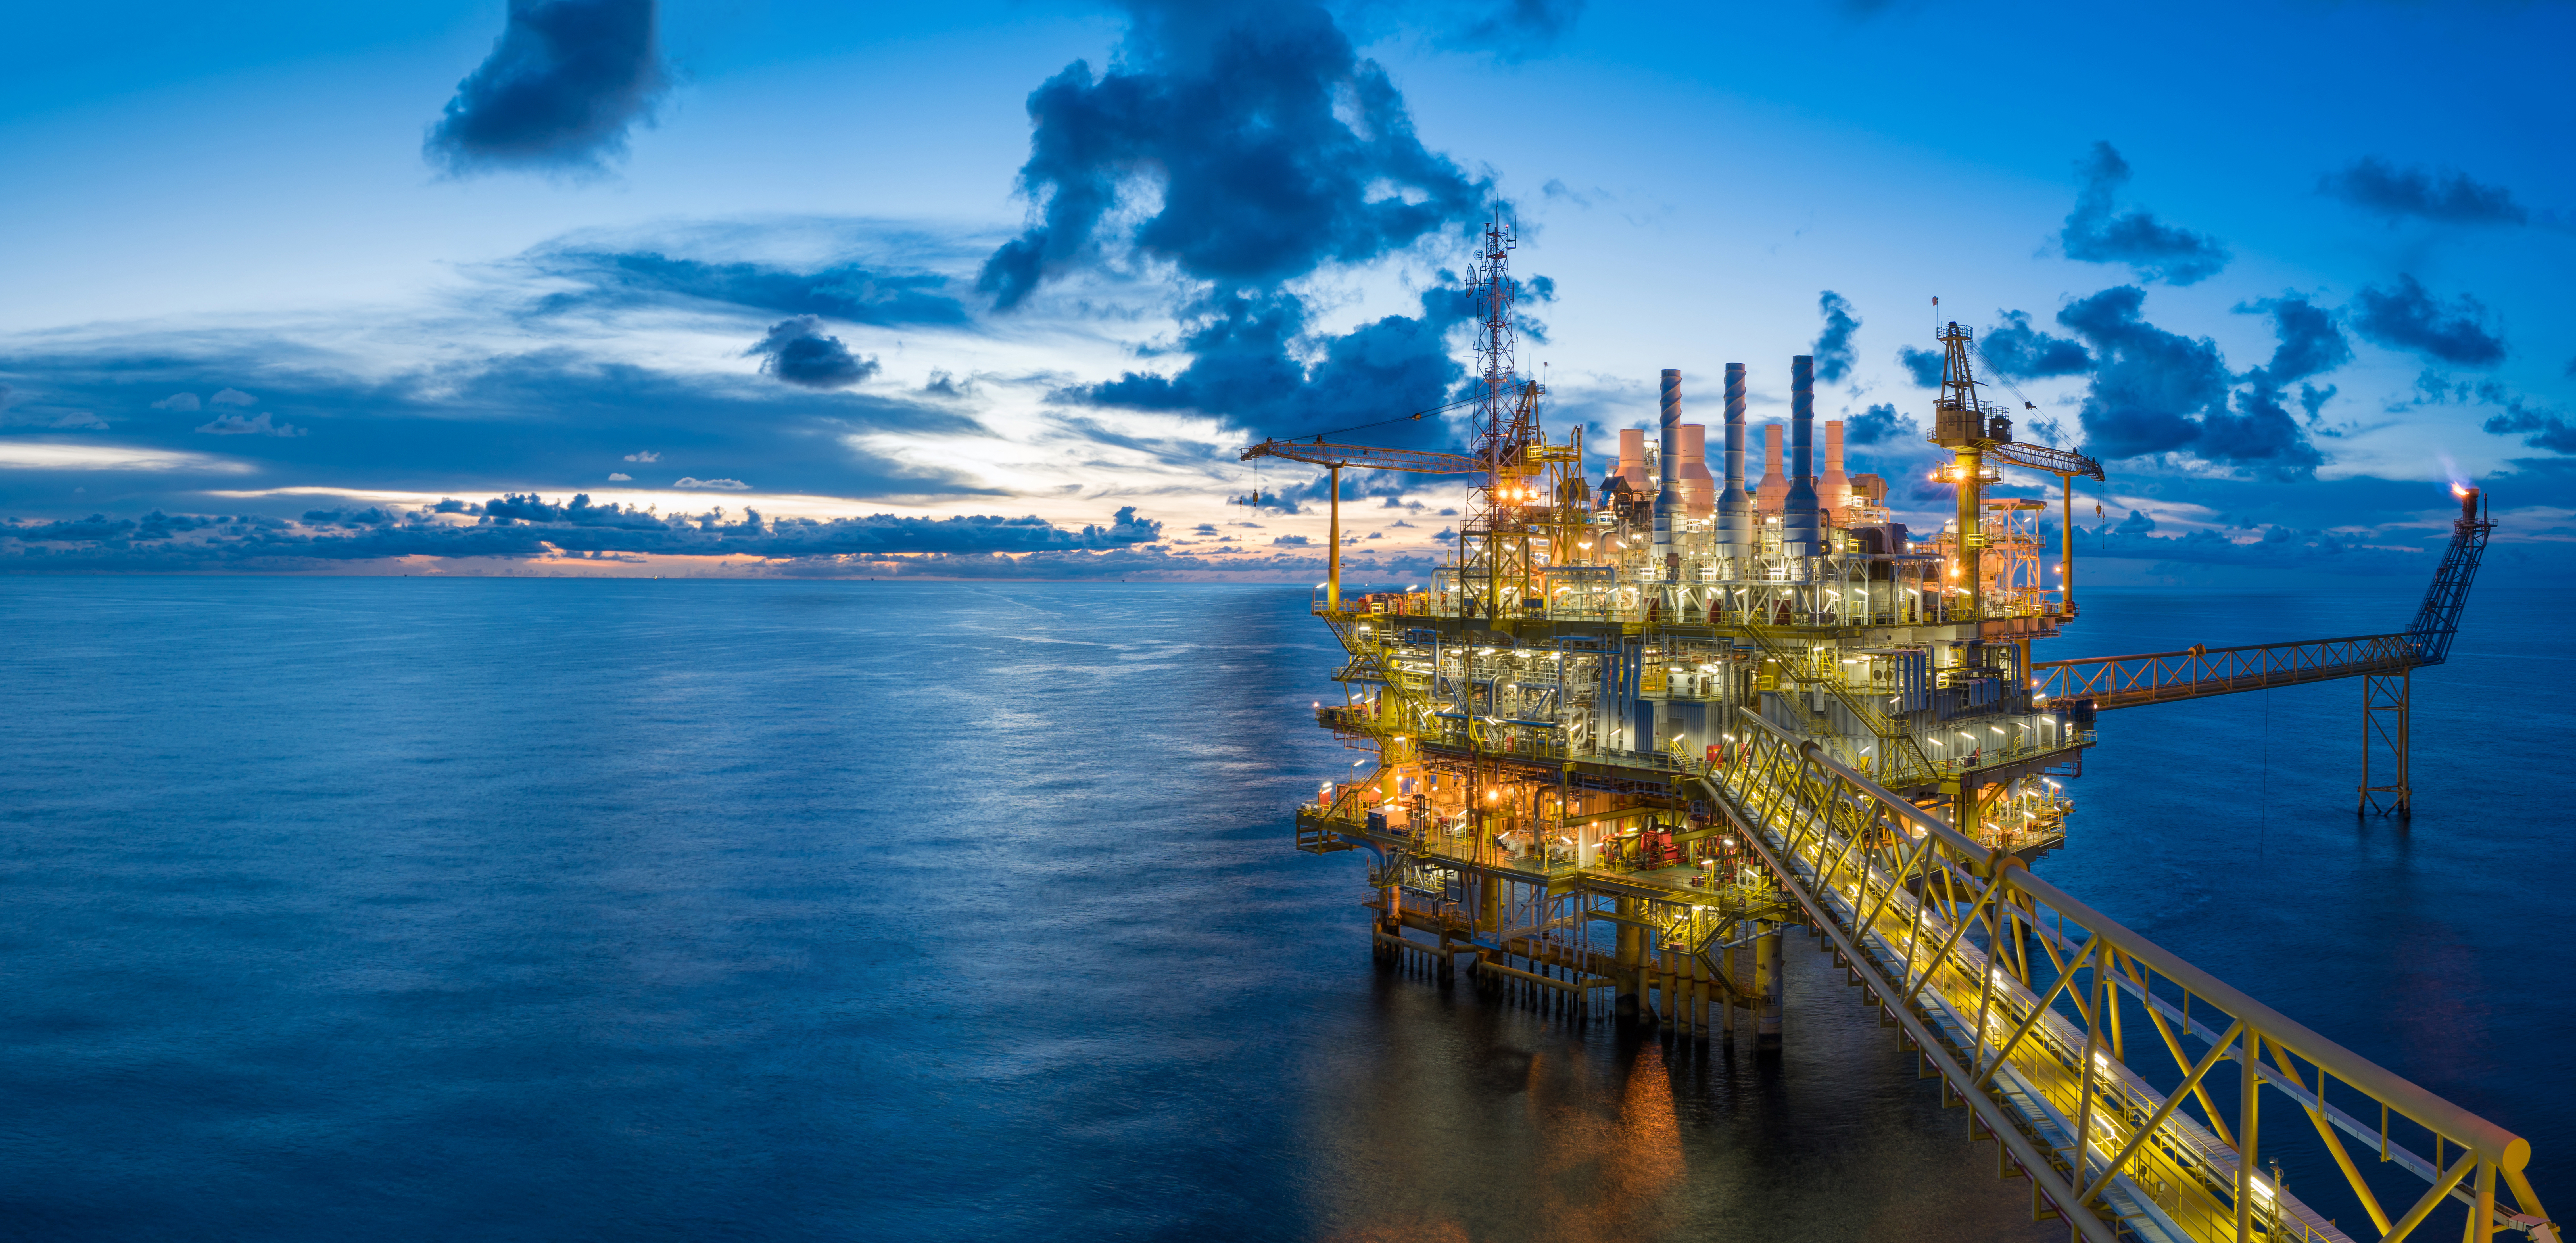 offshore oil rig at dusk